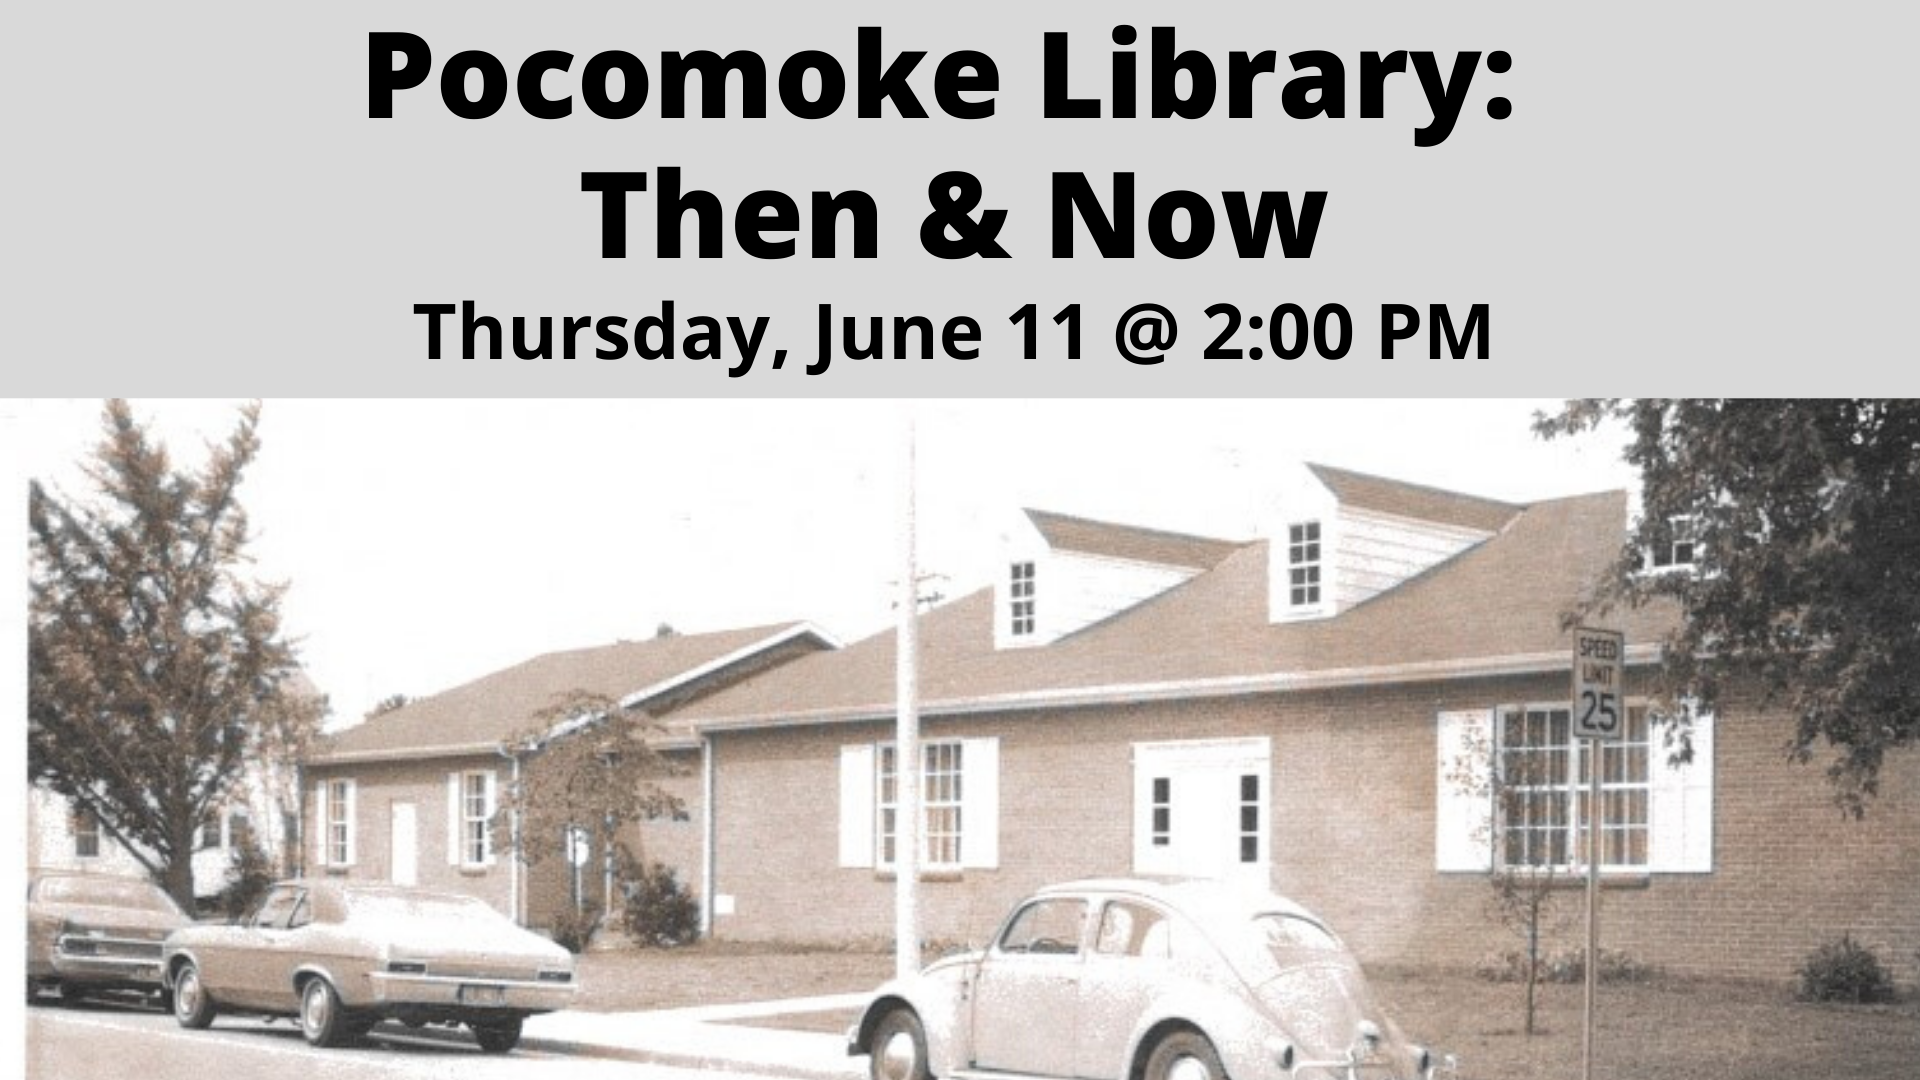 Pocomoke Library Then & Now